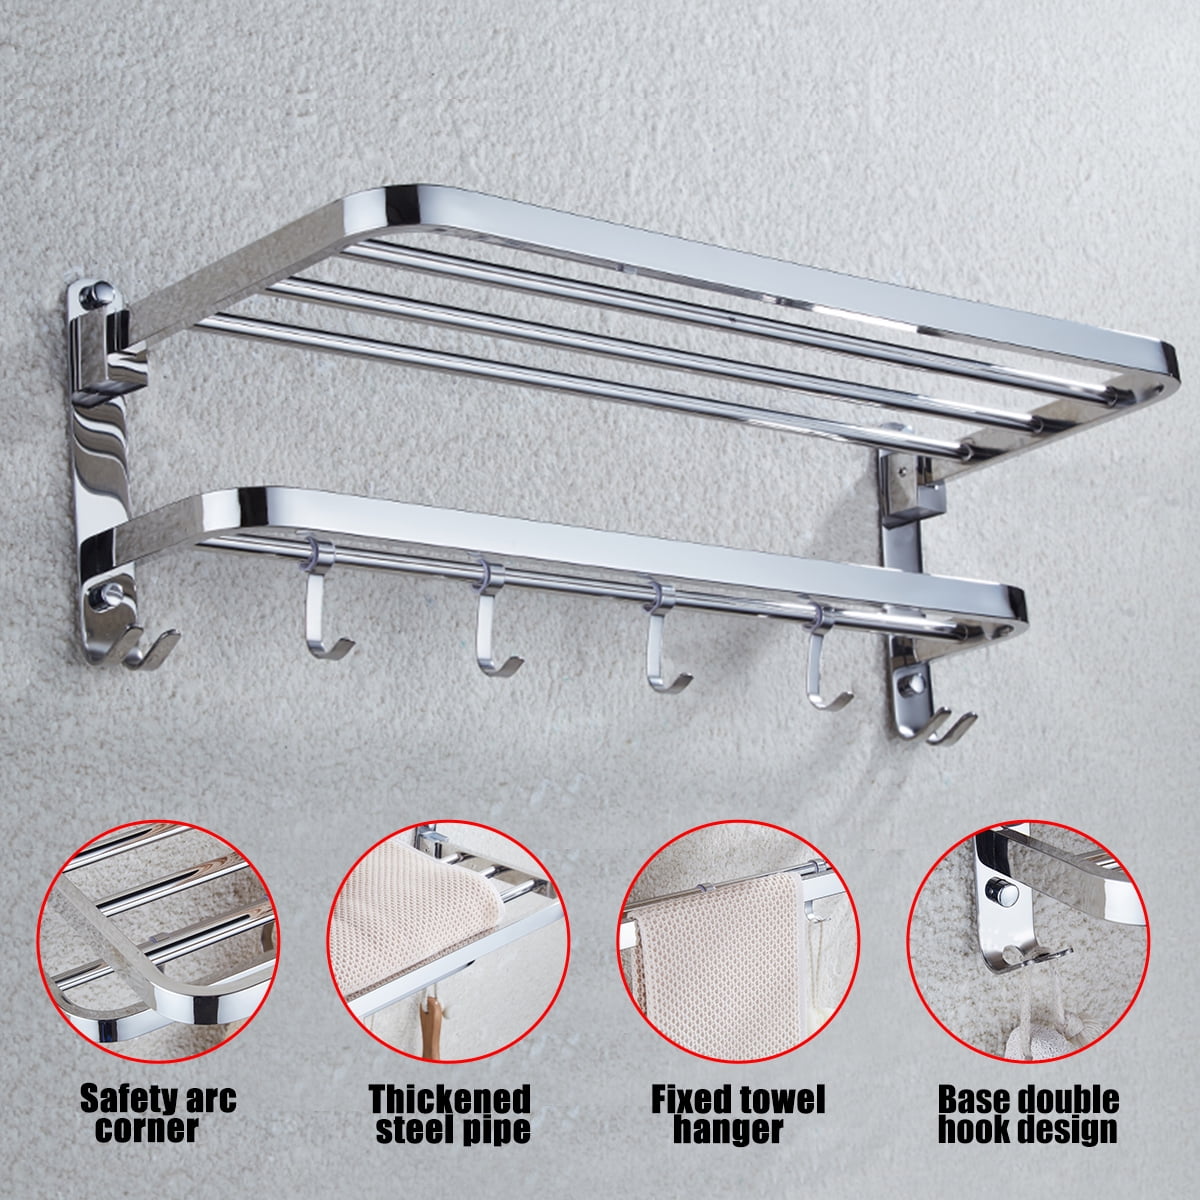 Details about   Double Chrome Towel Rail Holder Wall Mounted Bathroom Rack Shelf Alumimum 